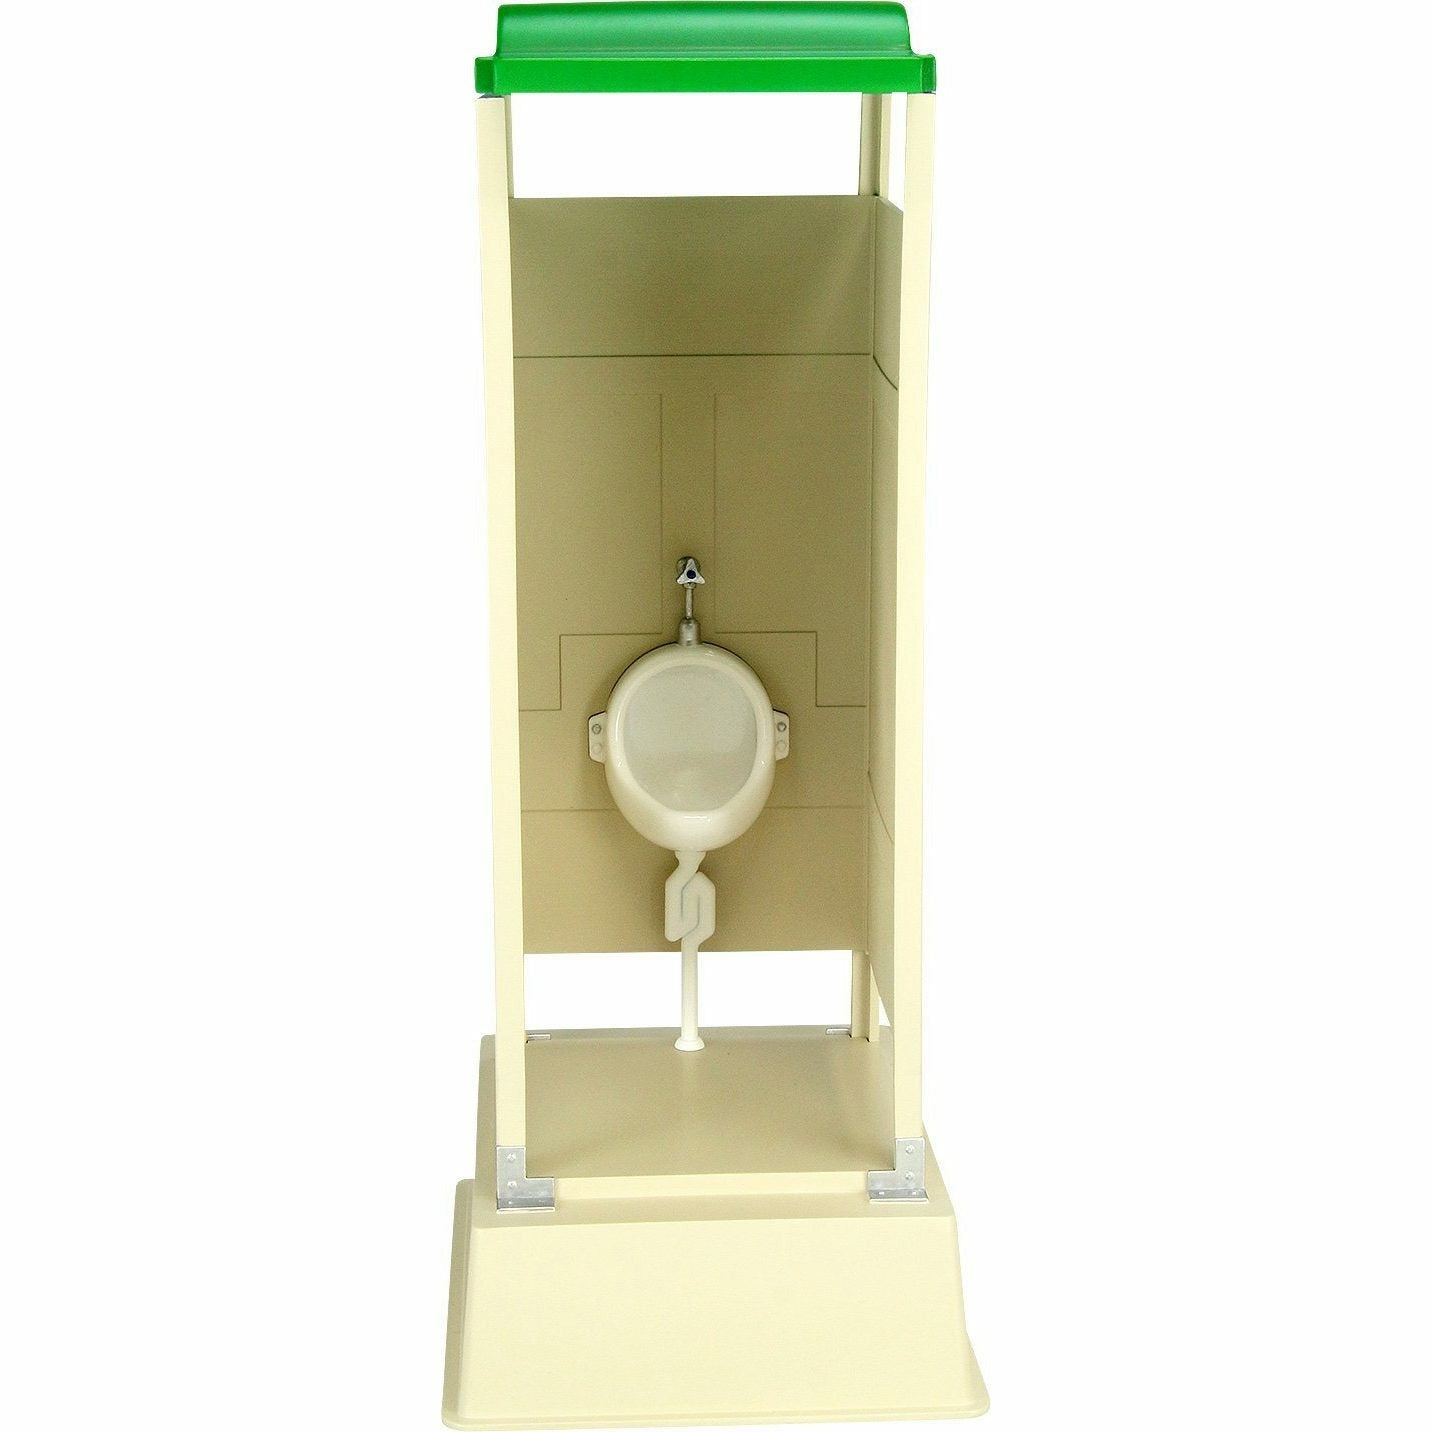 Mabell Original Miniature Model Series Portable Toilet TU-R1S 1/12 Scale Figure